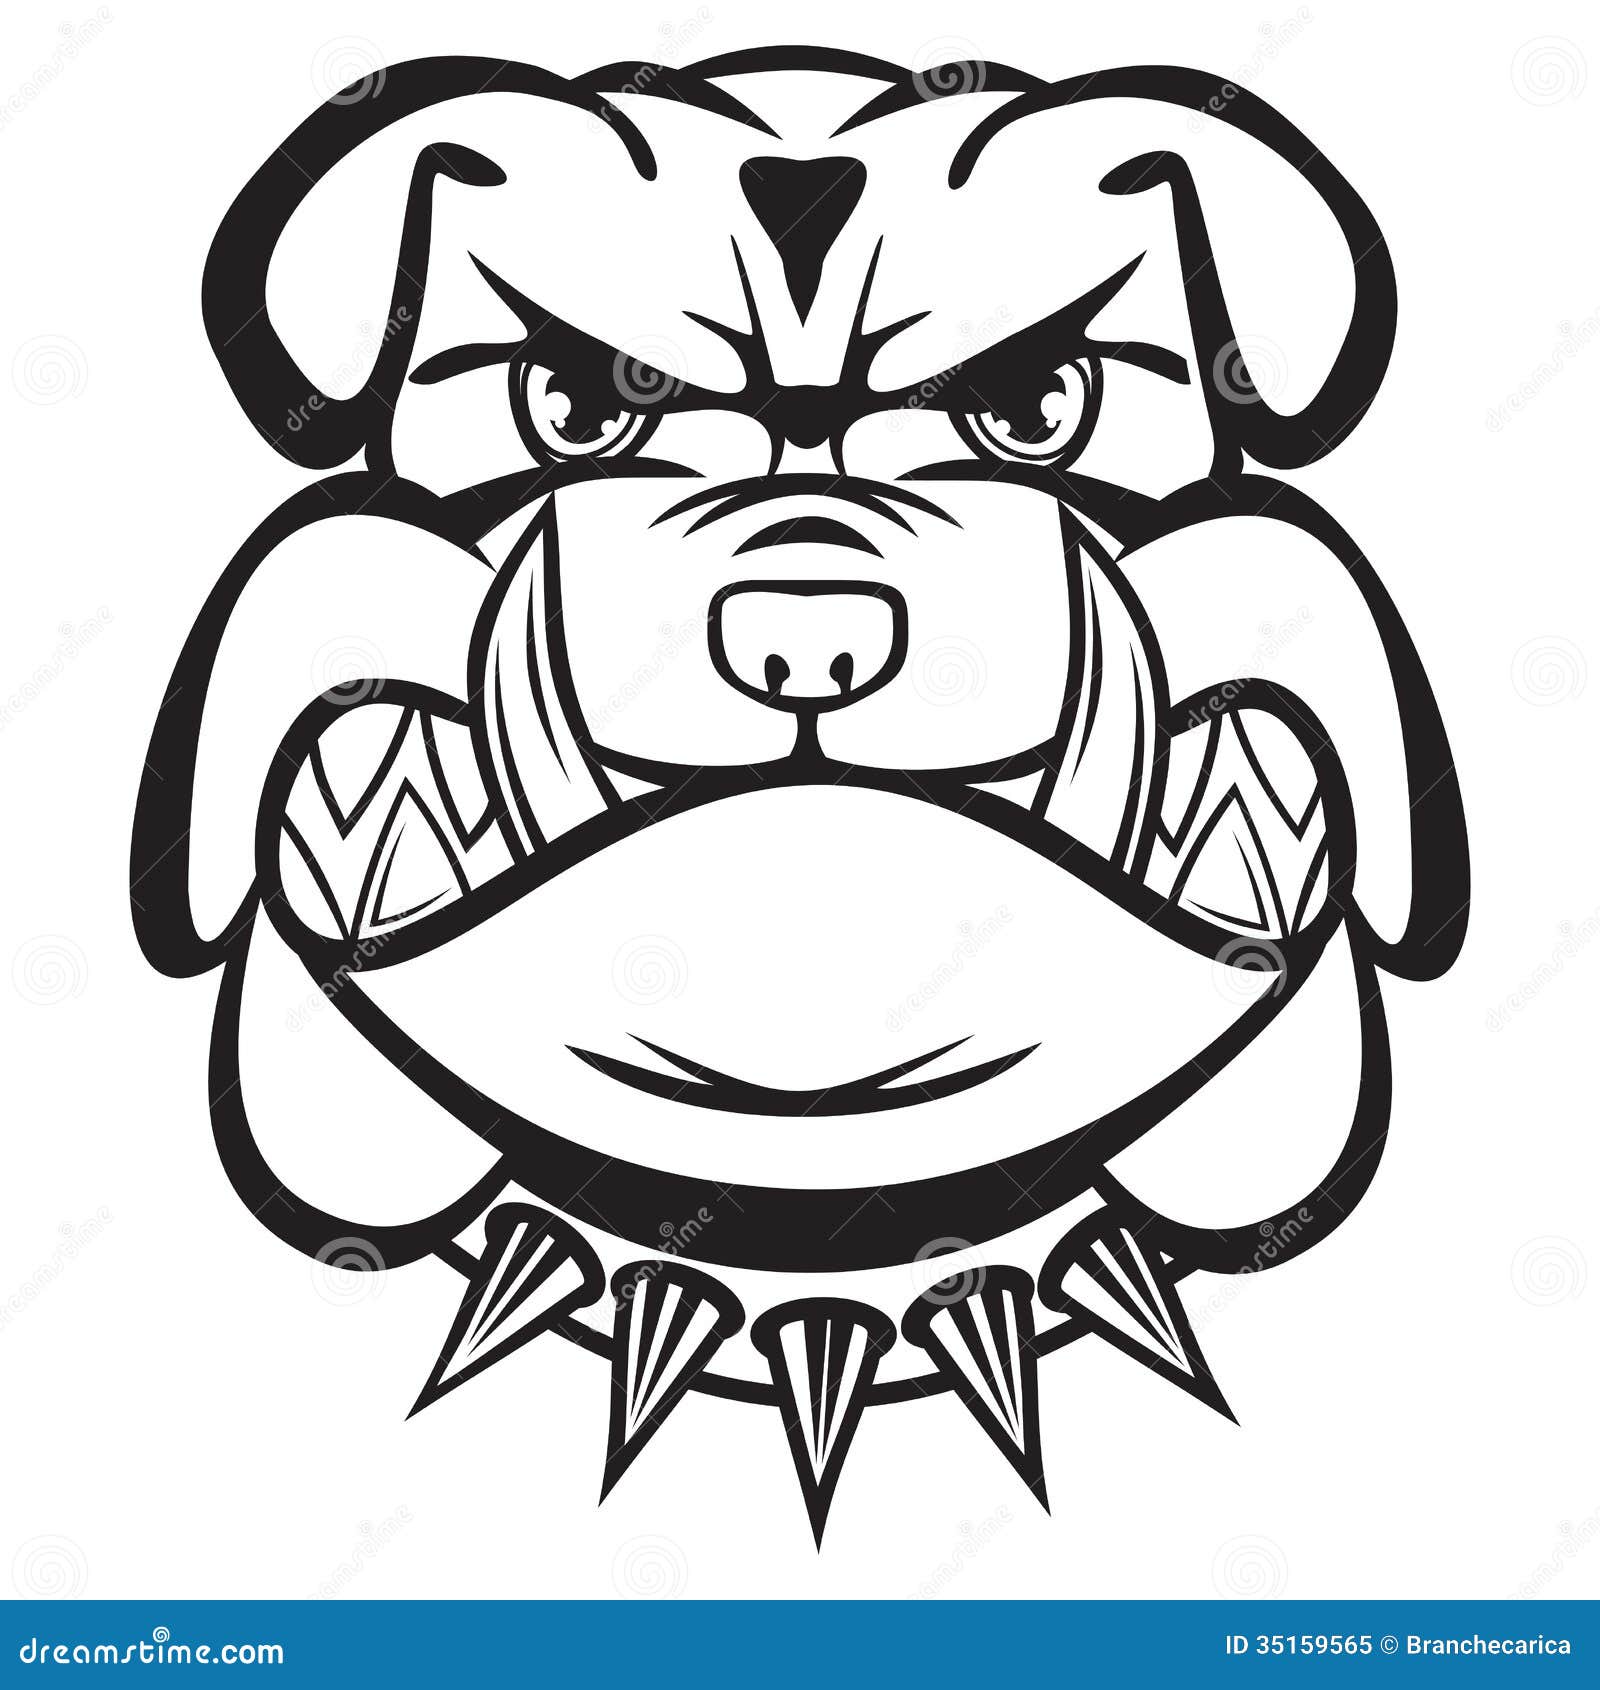 free black and white bulldog clipart - photo #38